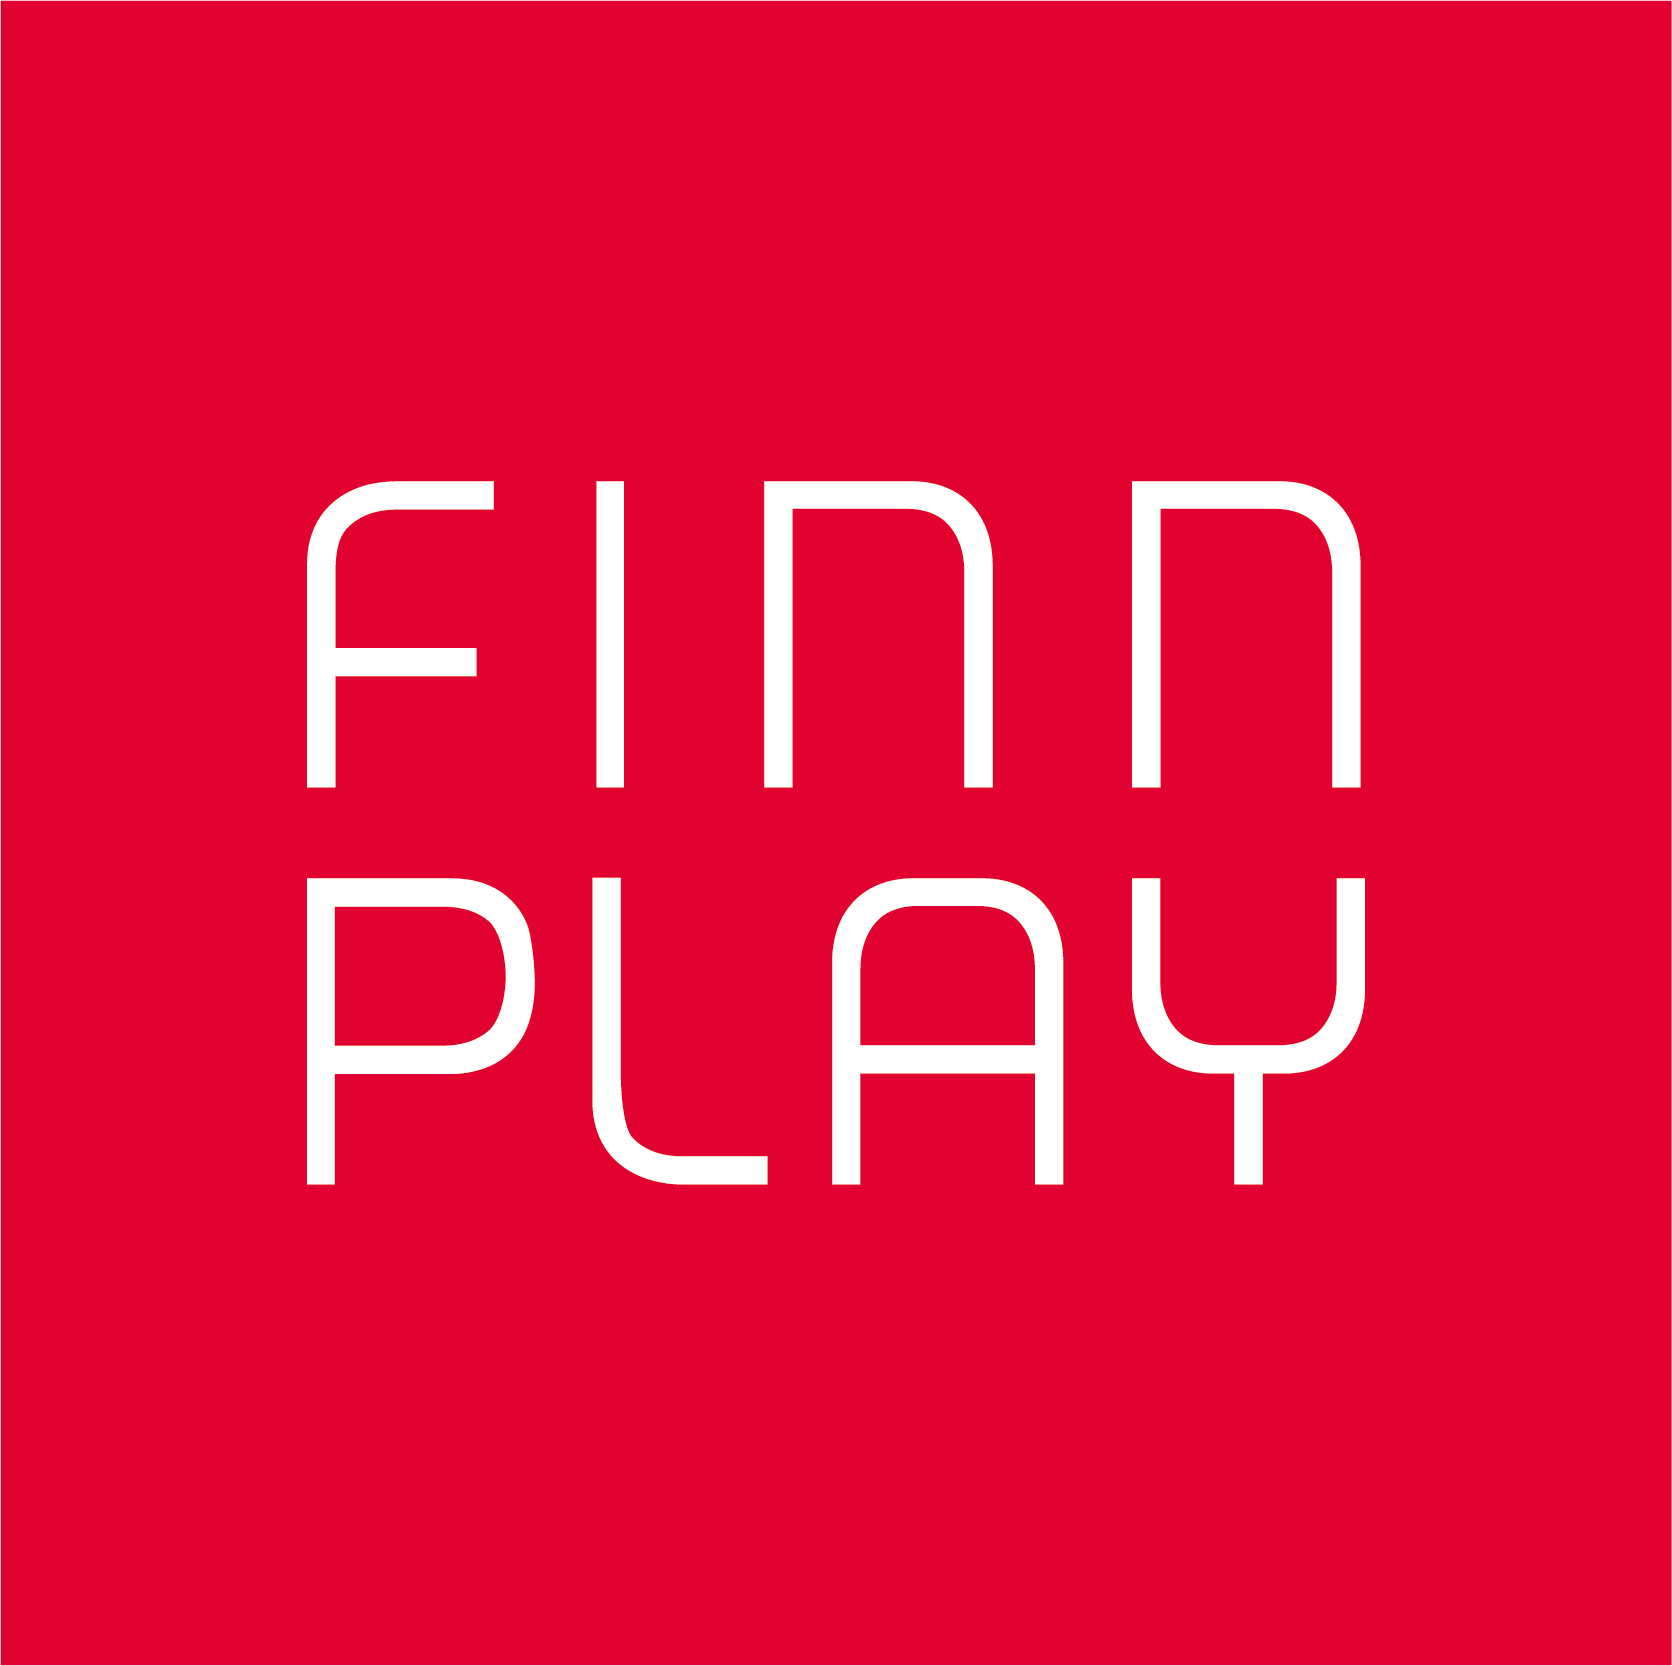 Finnplay Technologies Oy